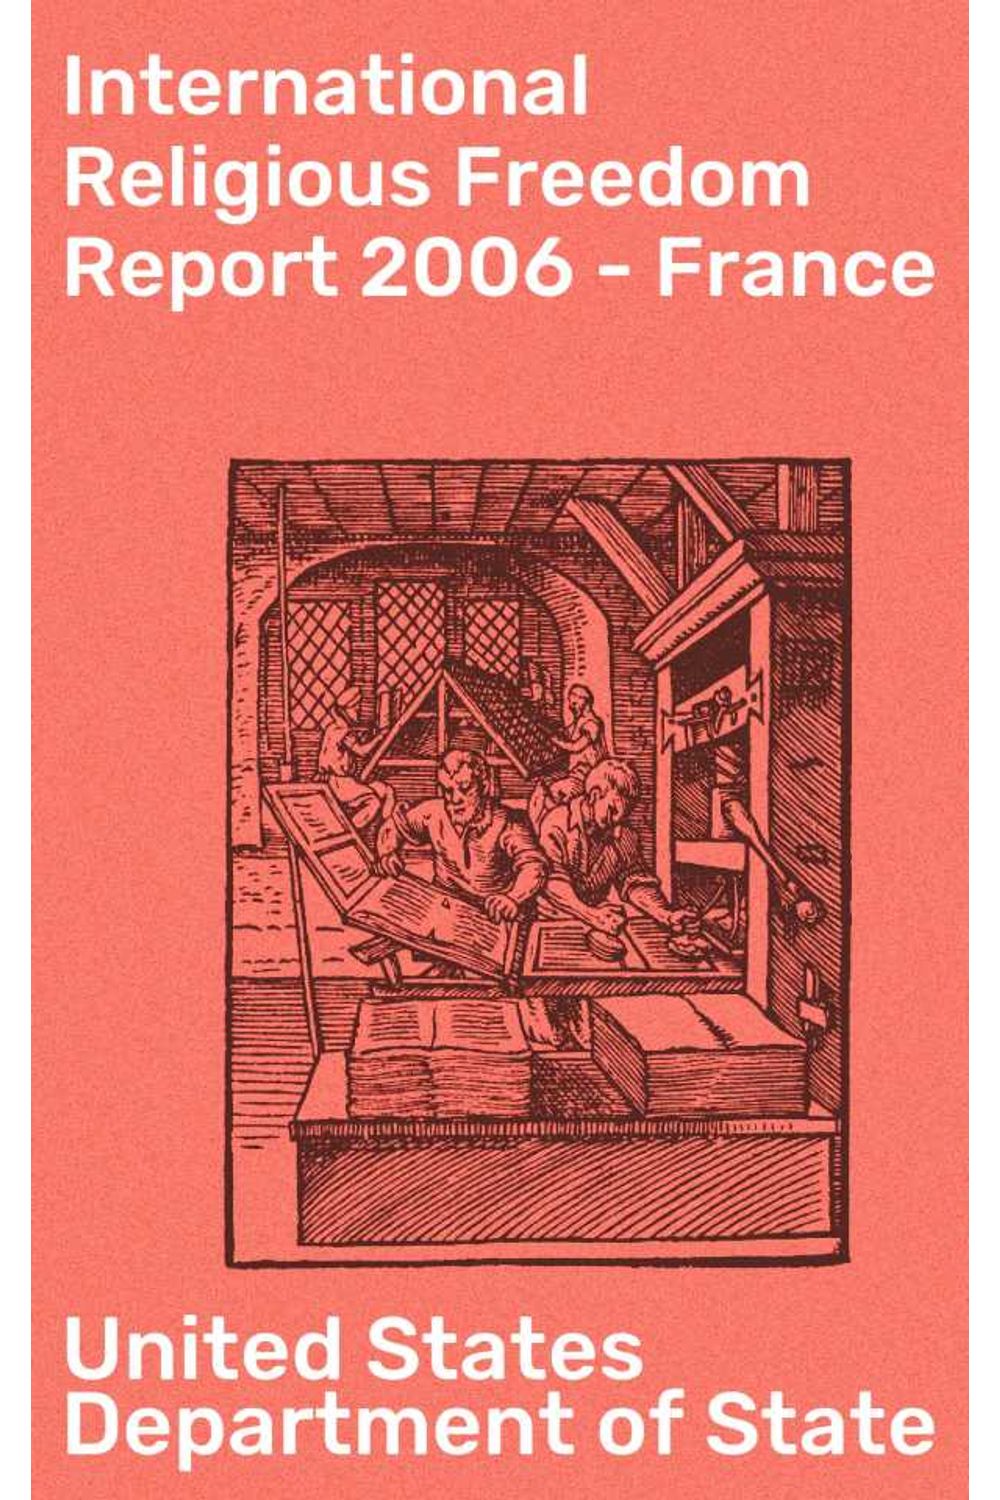 bw-international-religious-freedom-report-2006-france-good-press-4064066402150